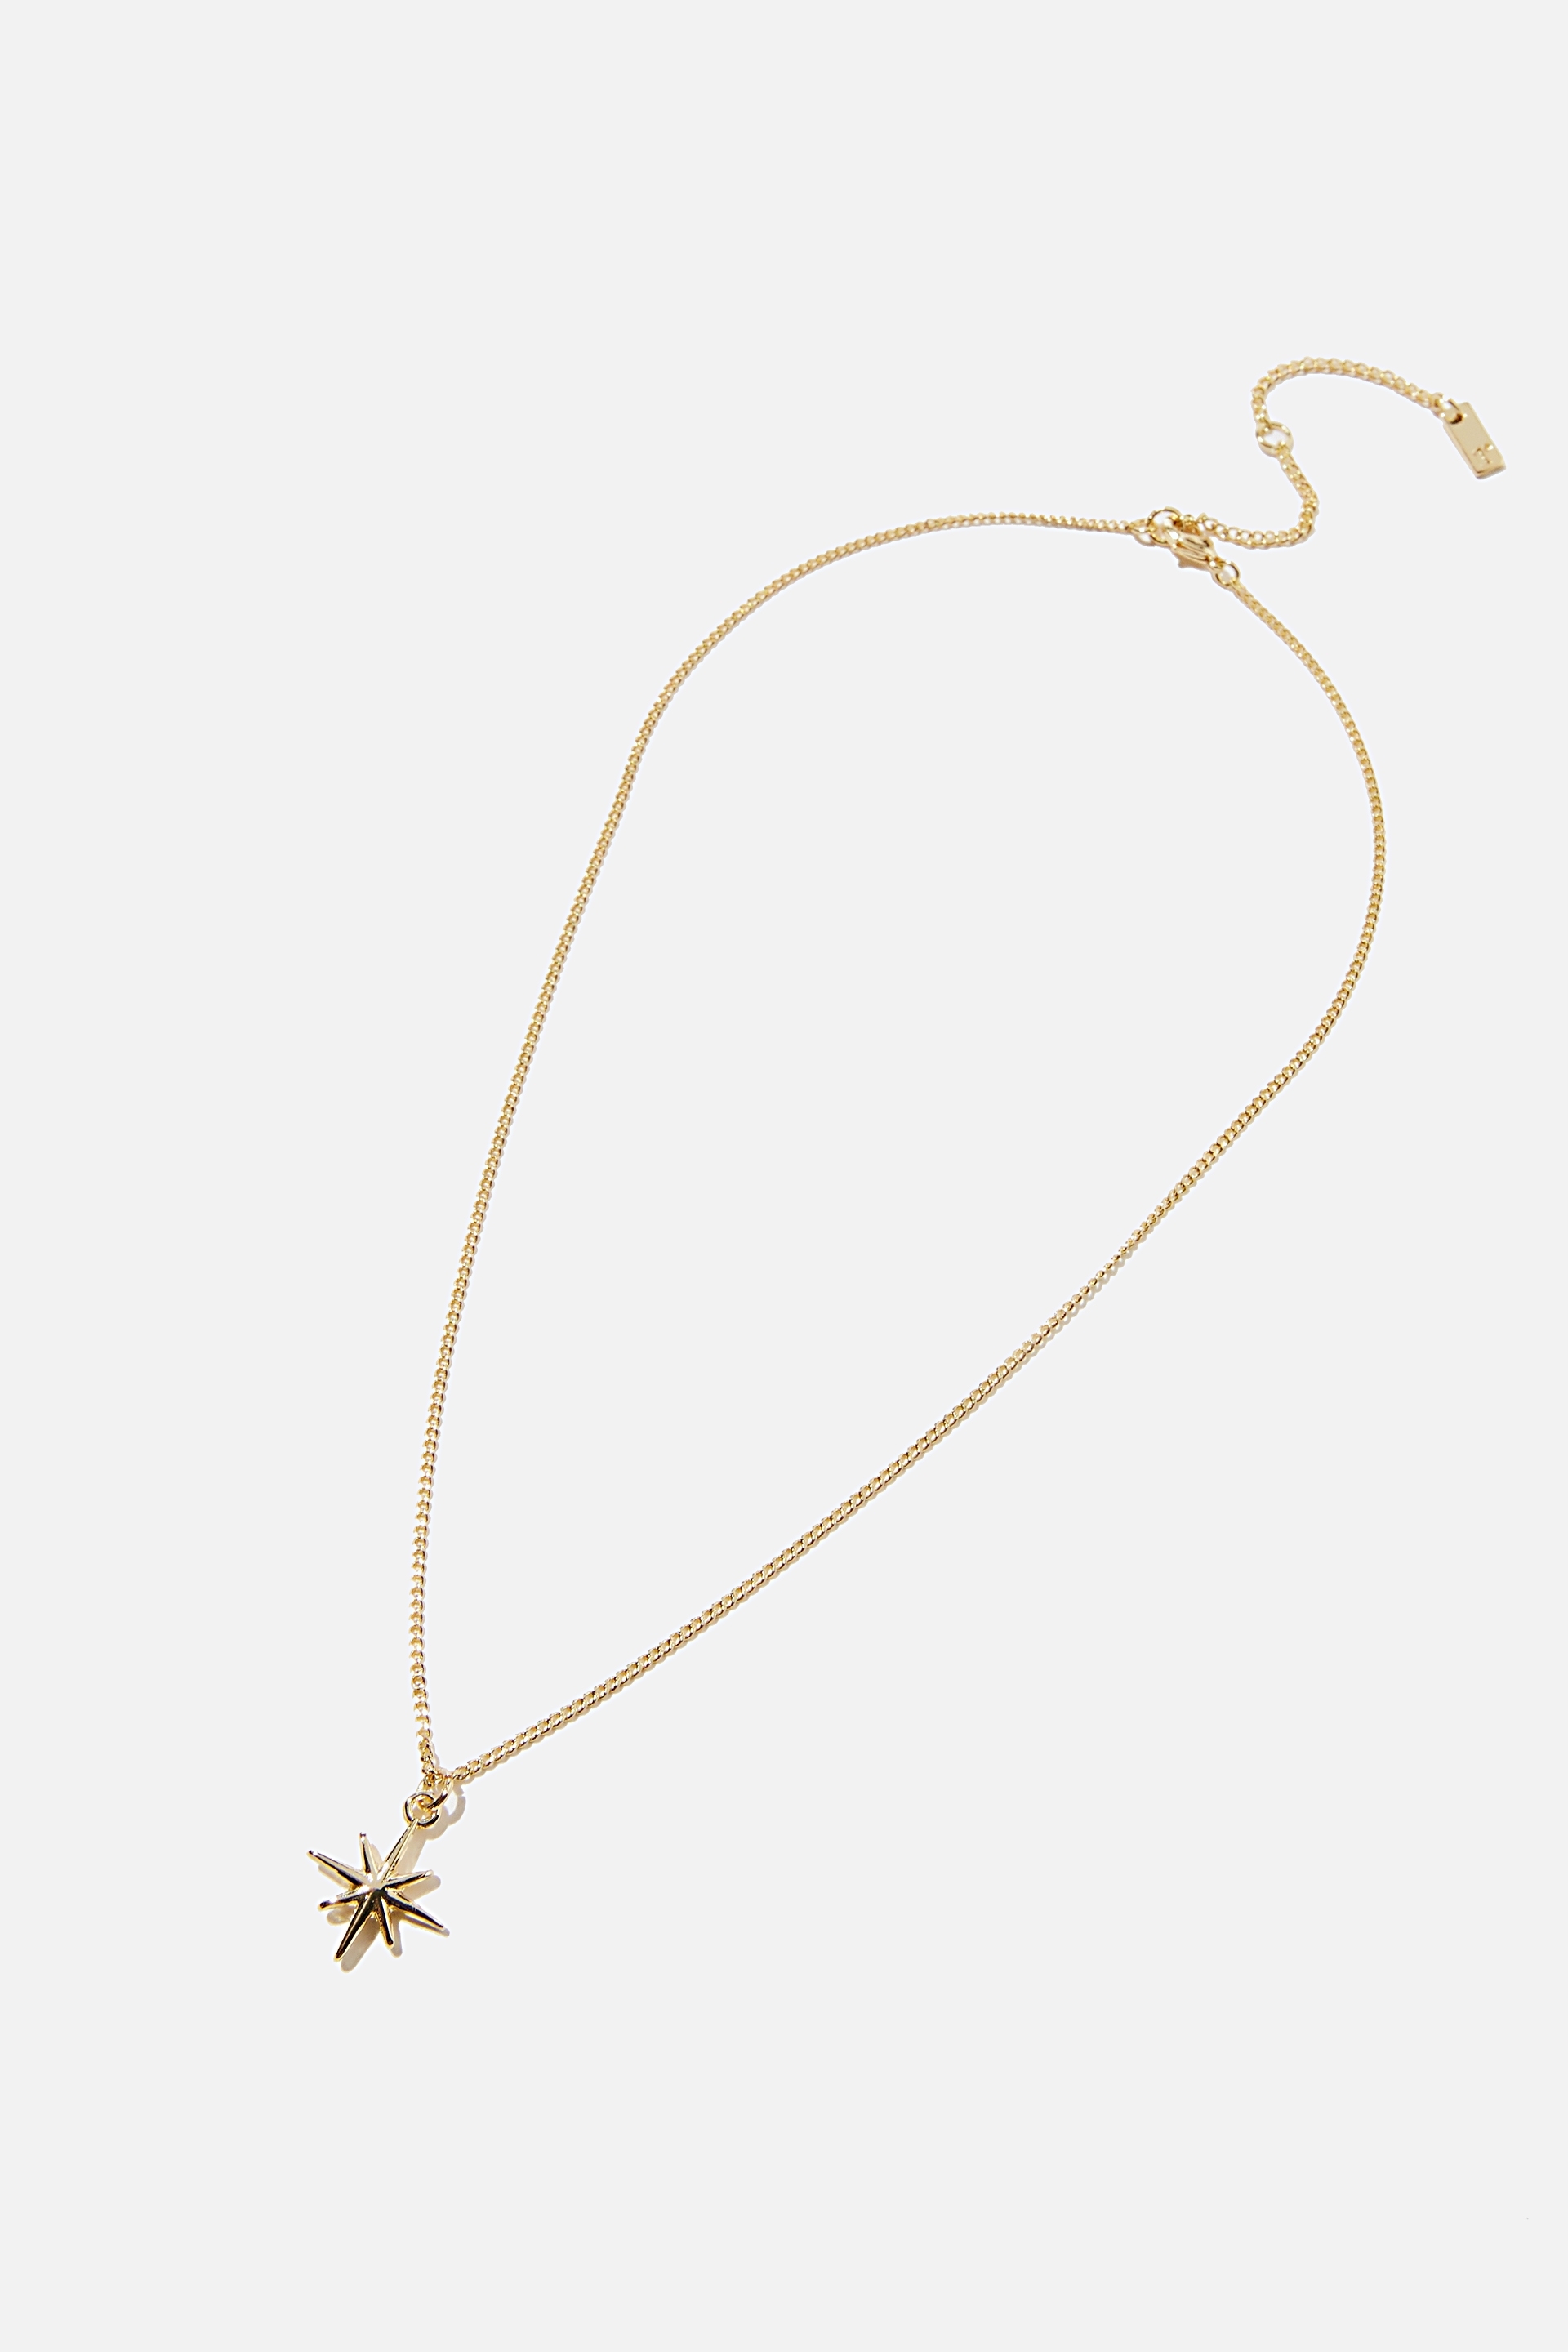 Rubi - Premium Pendant Necklace - Gold plated celestial star